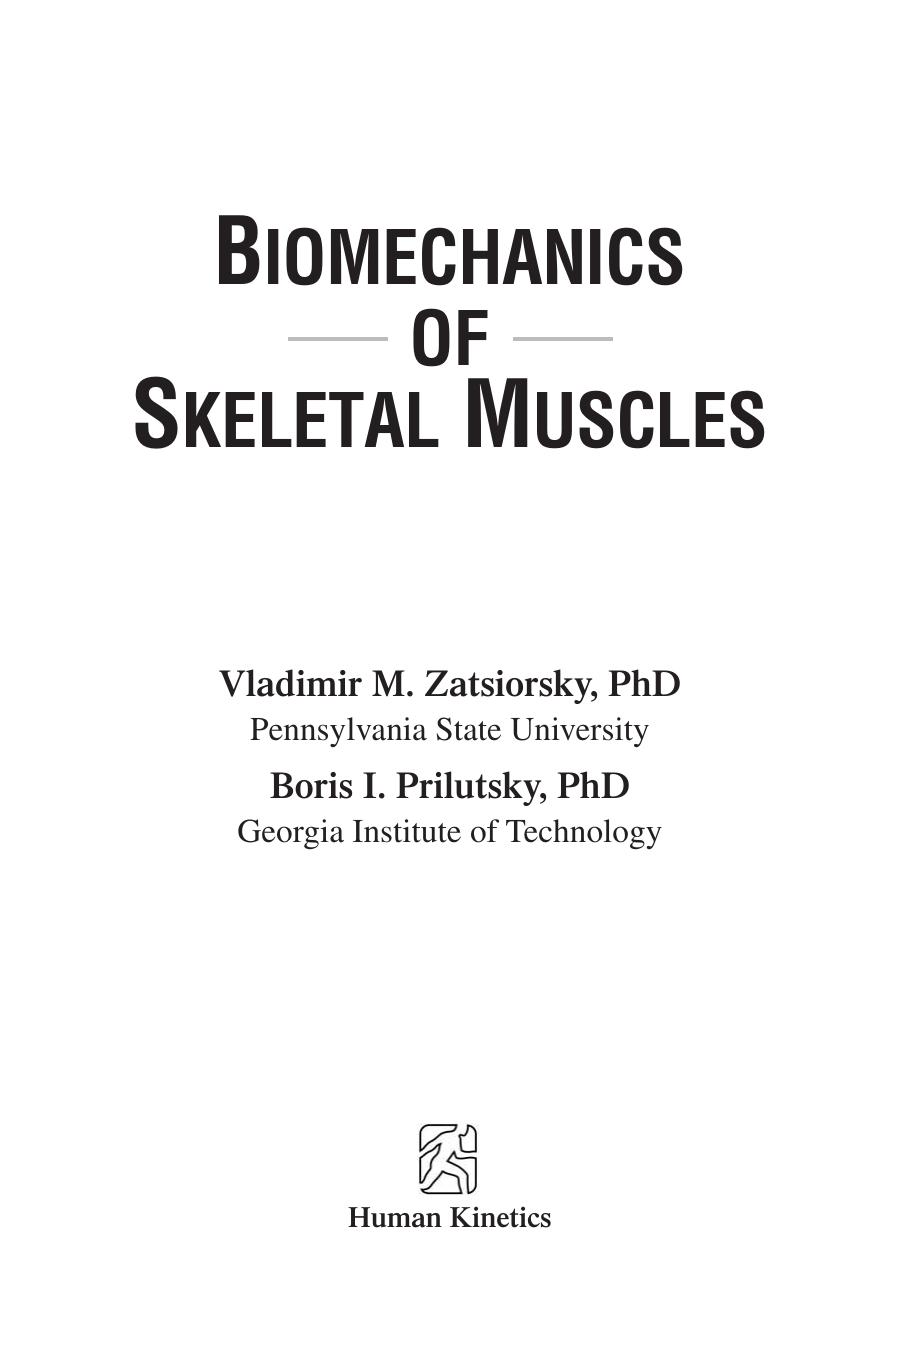 Biomechanics of Skeletal Muscles